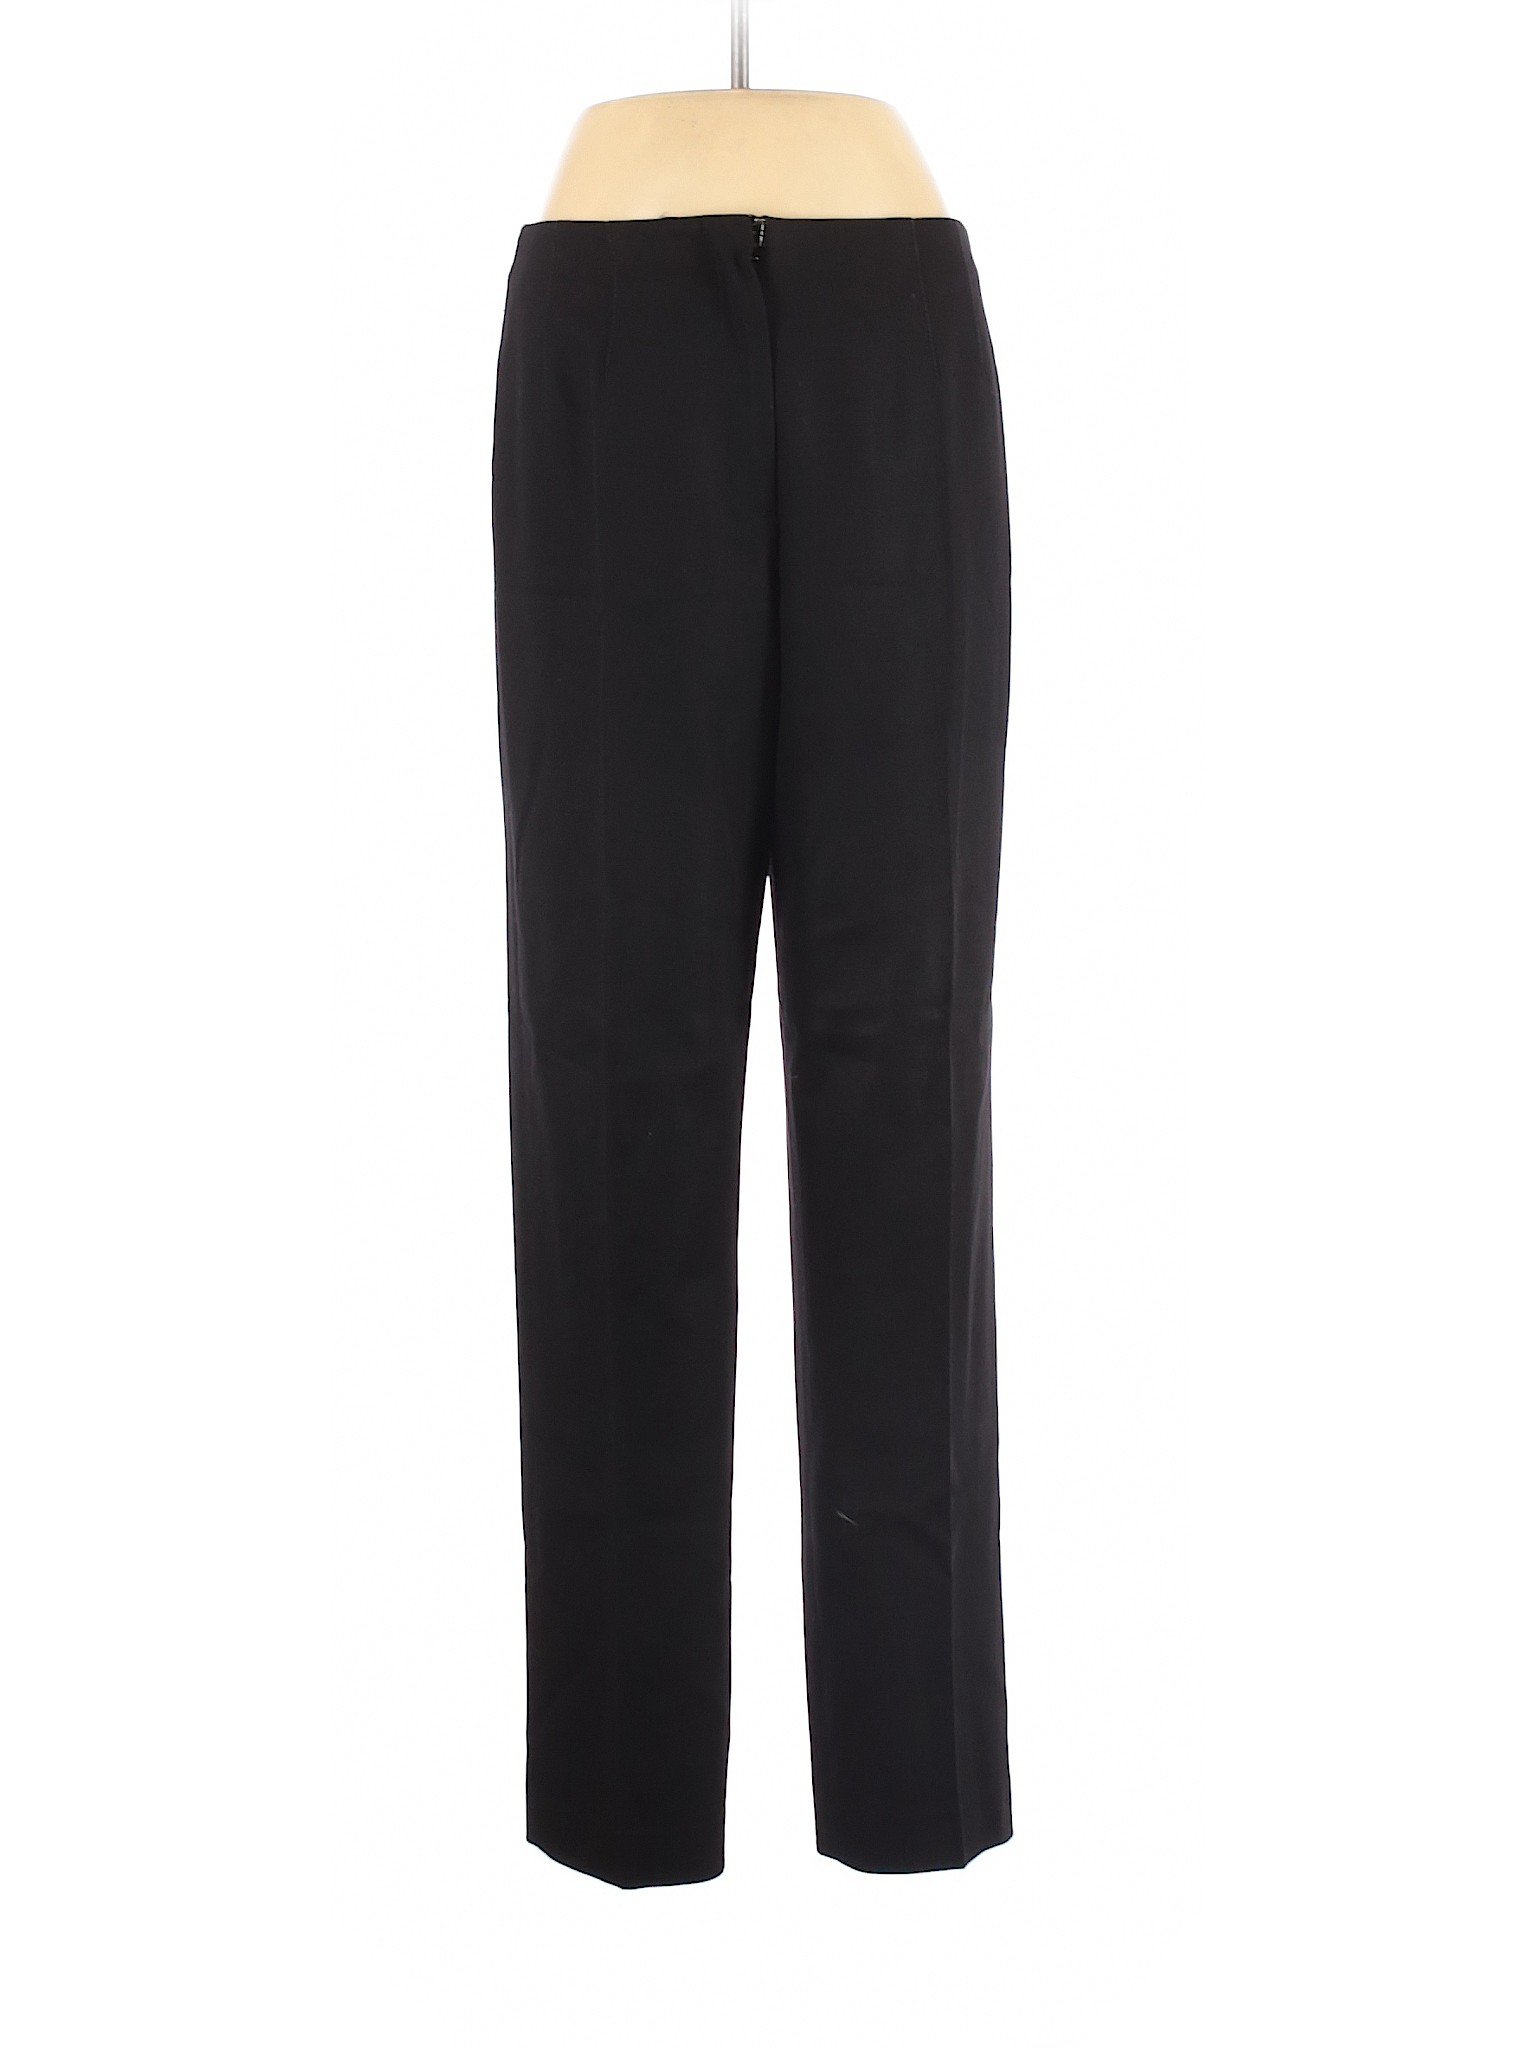 Talbots Women Black Wool Pants 8 | eBay